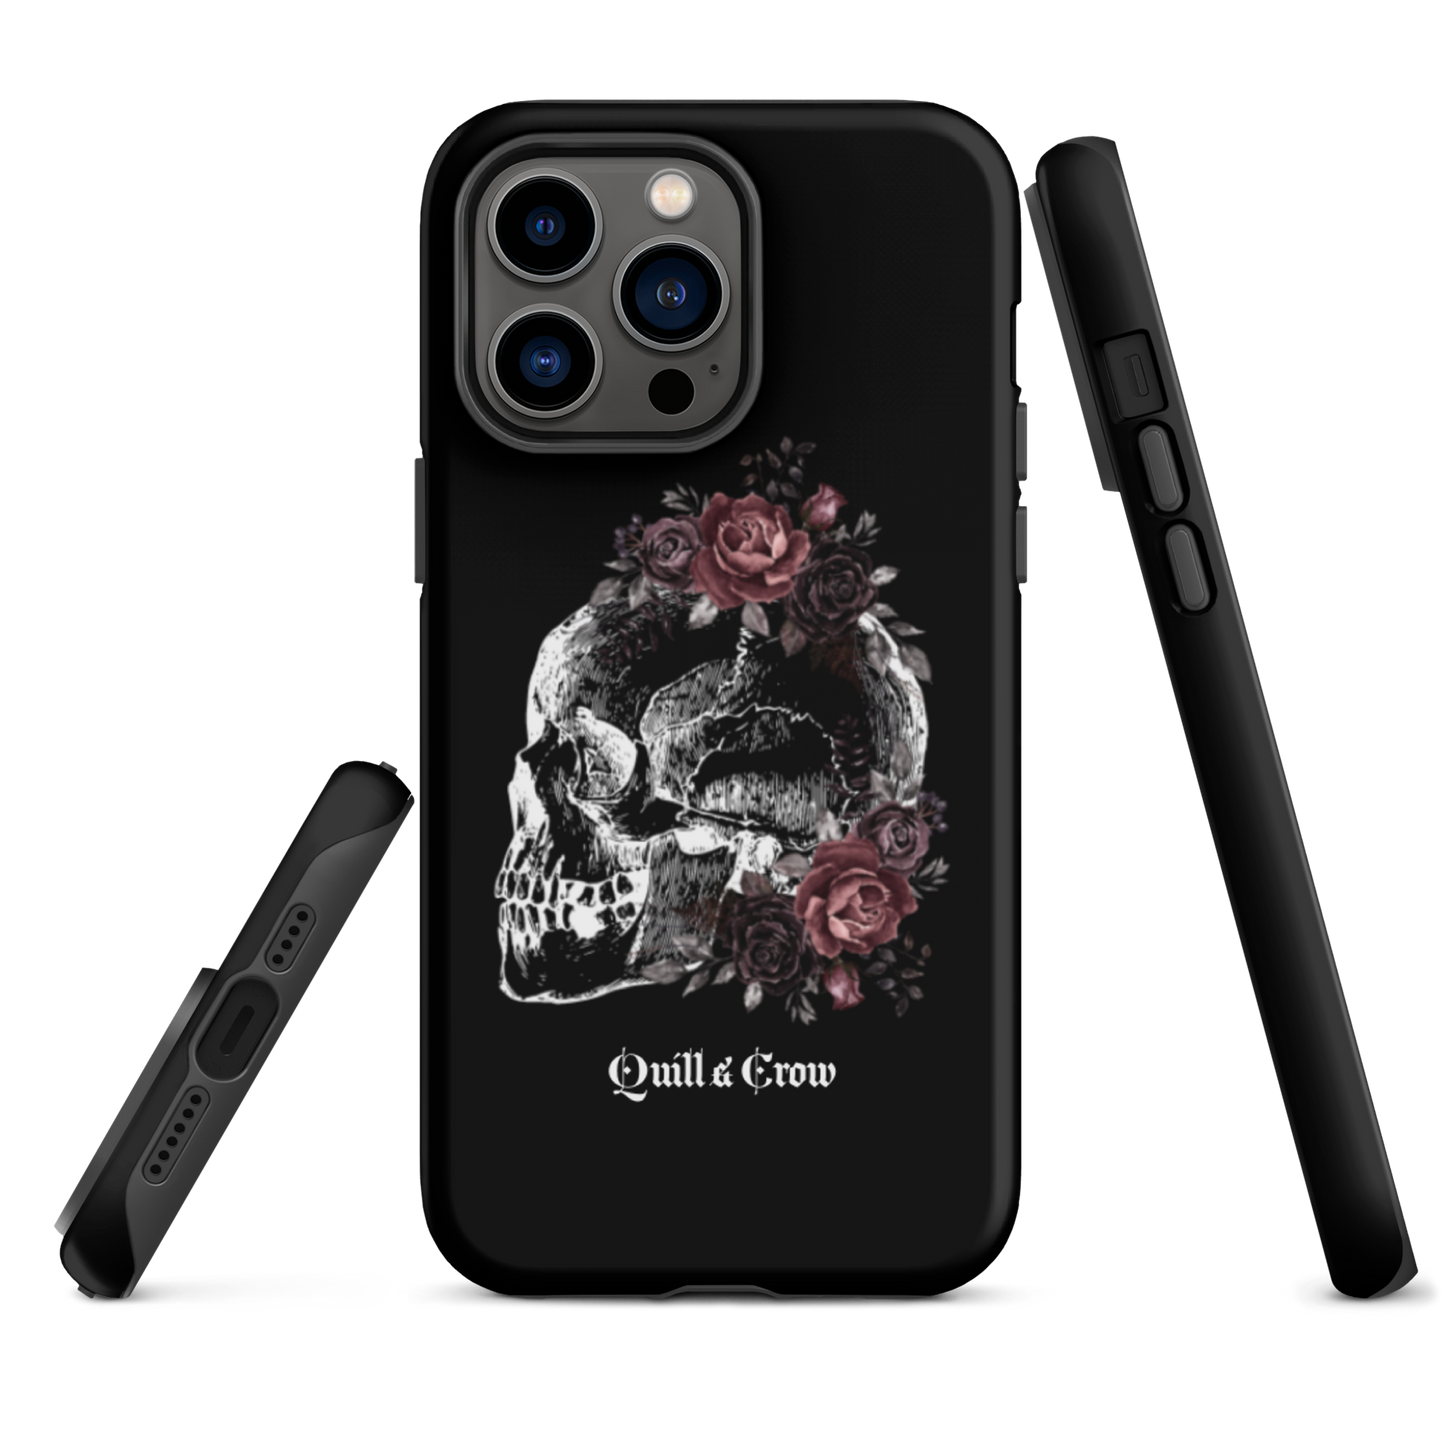 Death & Roses iPhone Case